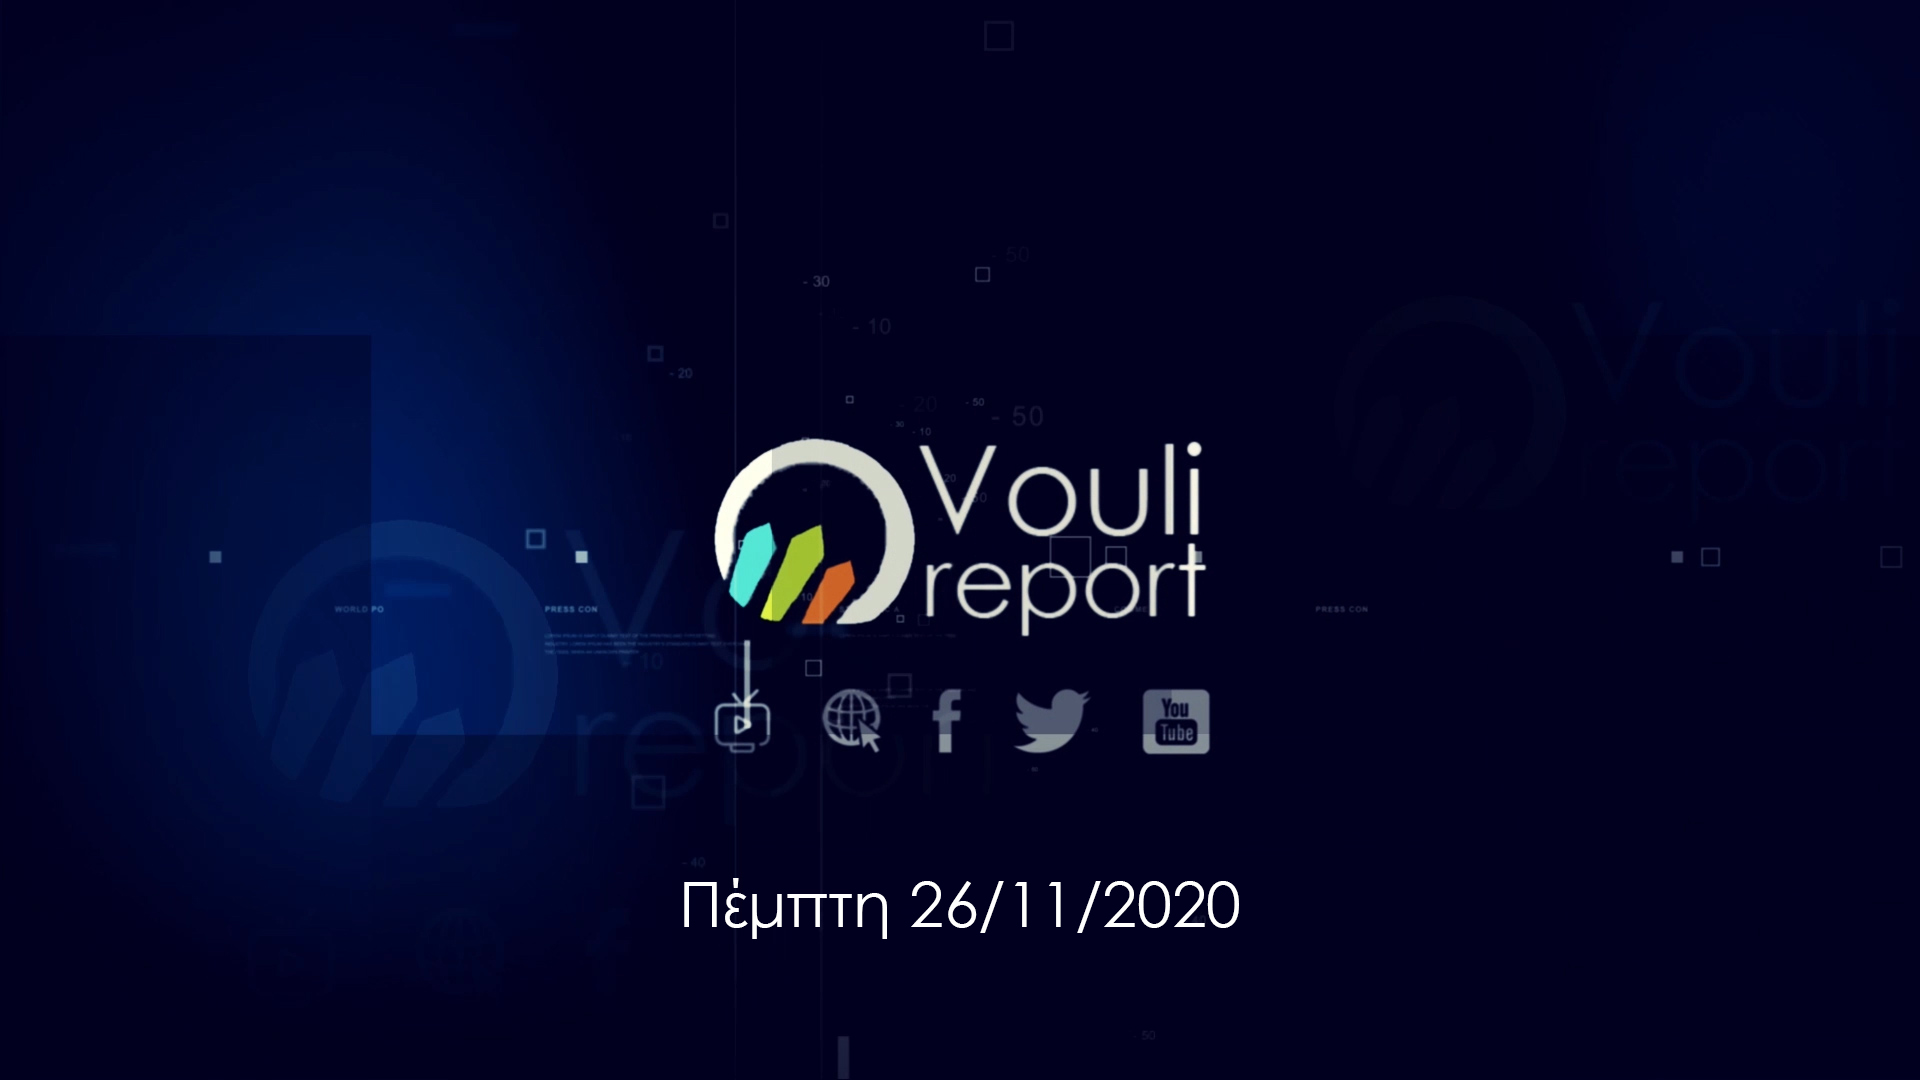 Vouli report | 26/11/2020